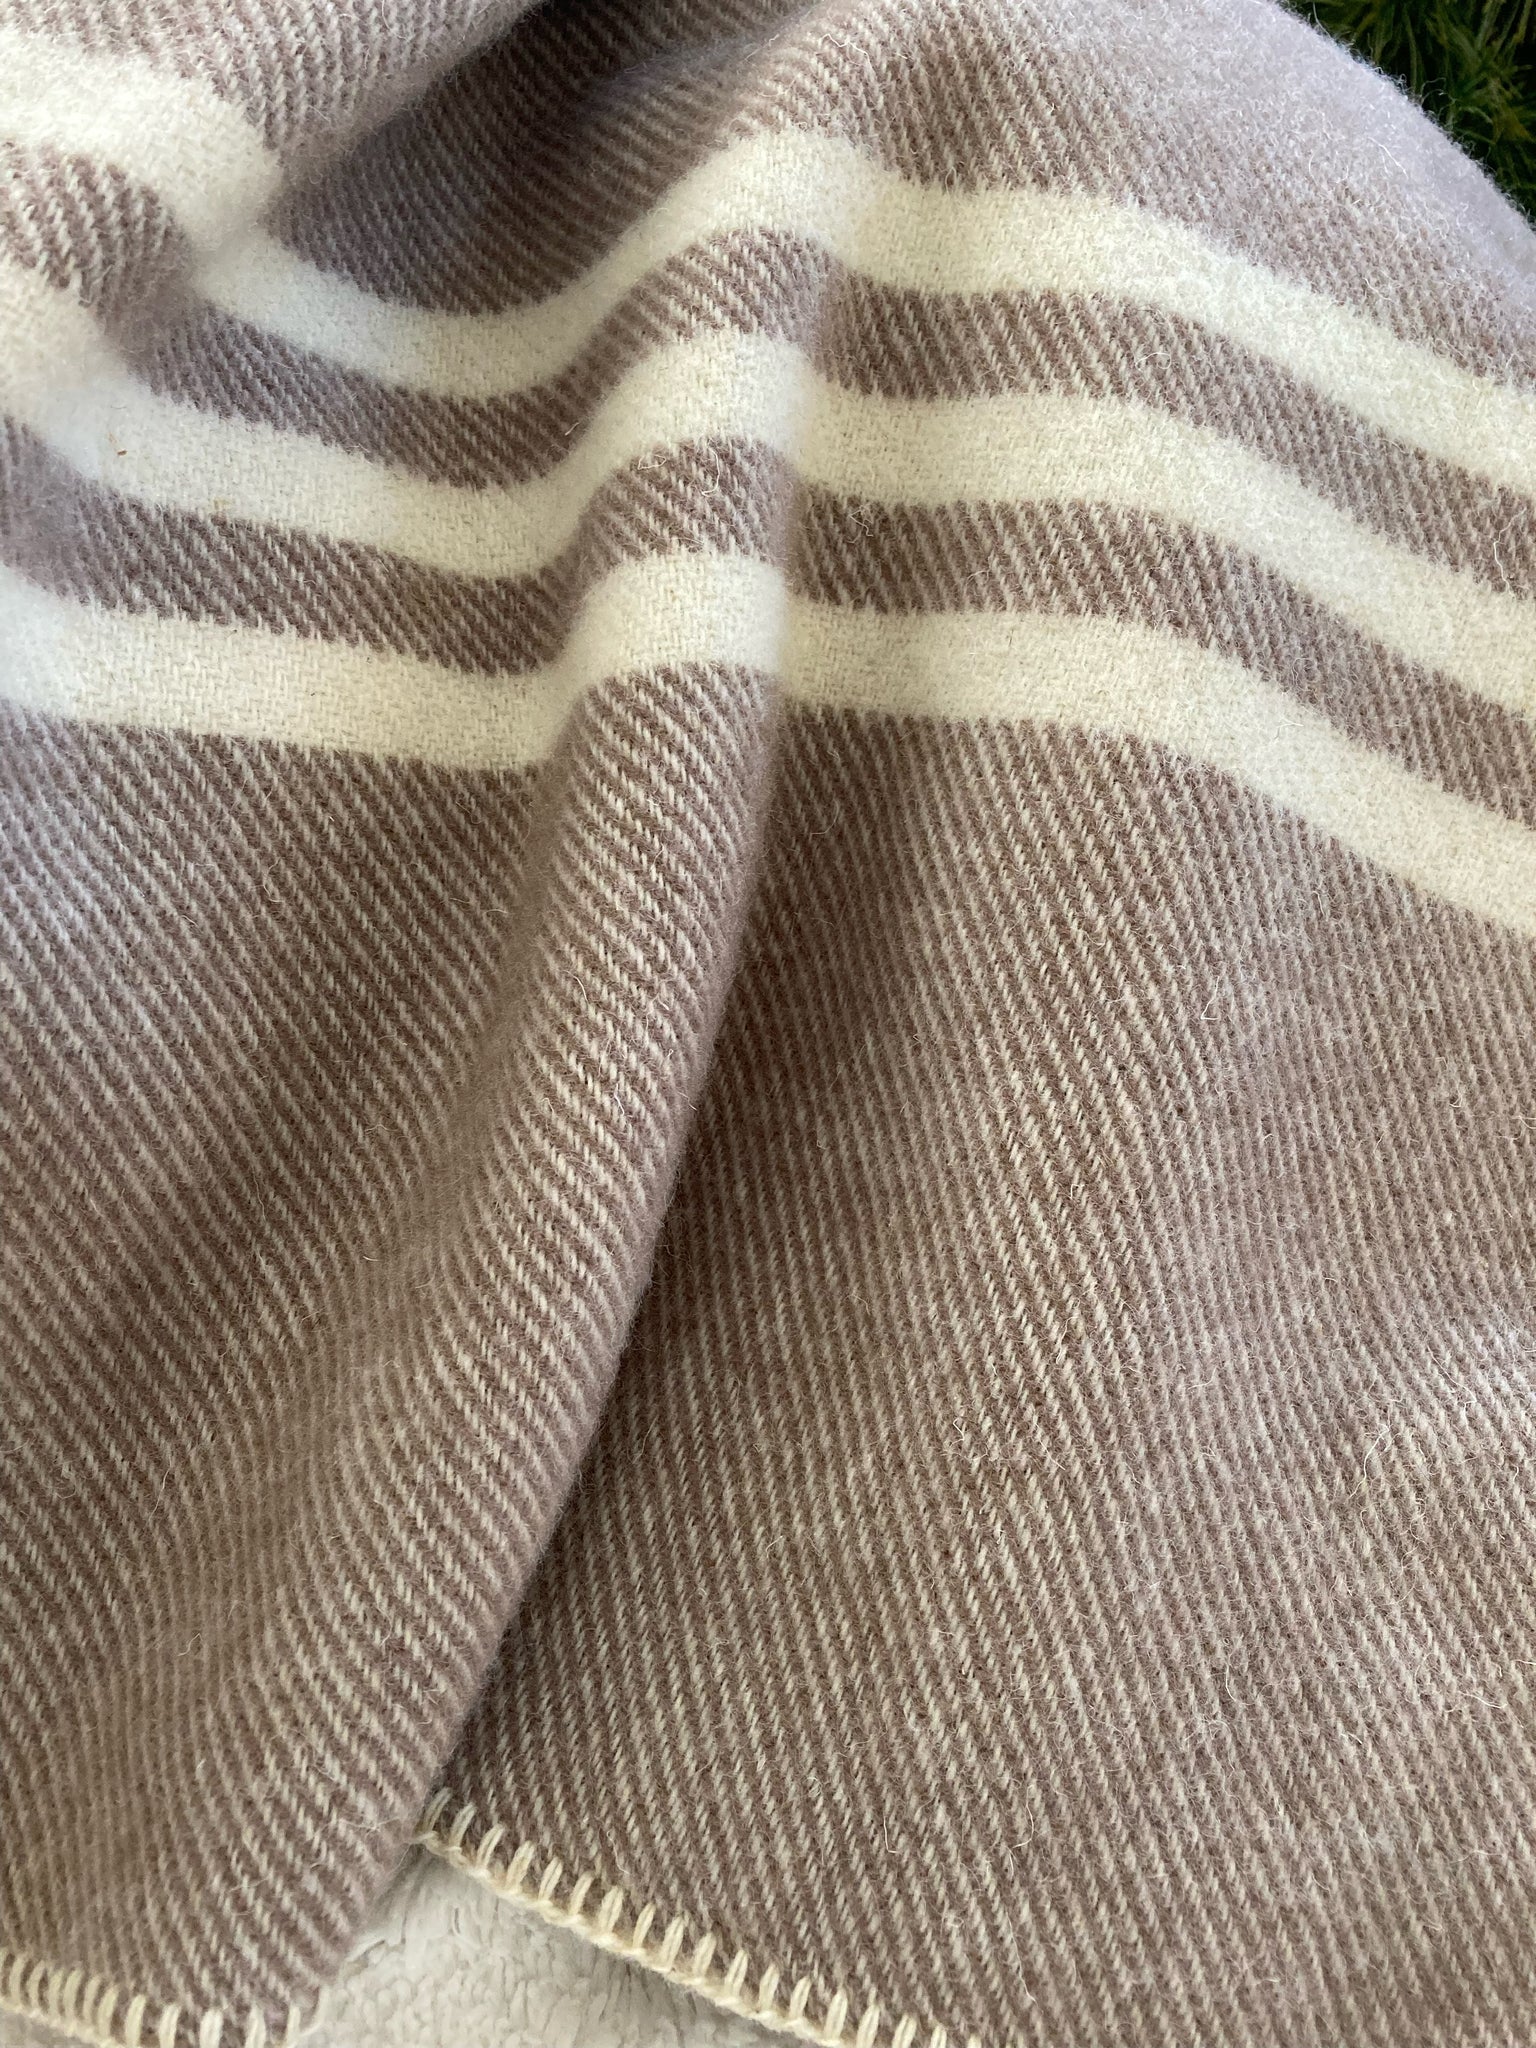 MacAusland's Lap Blanket - Taupe